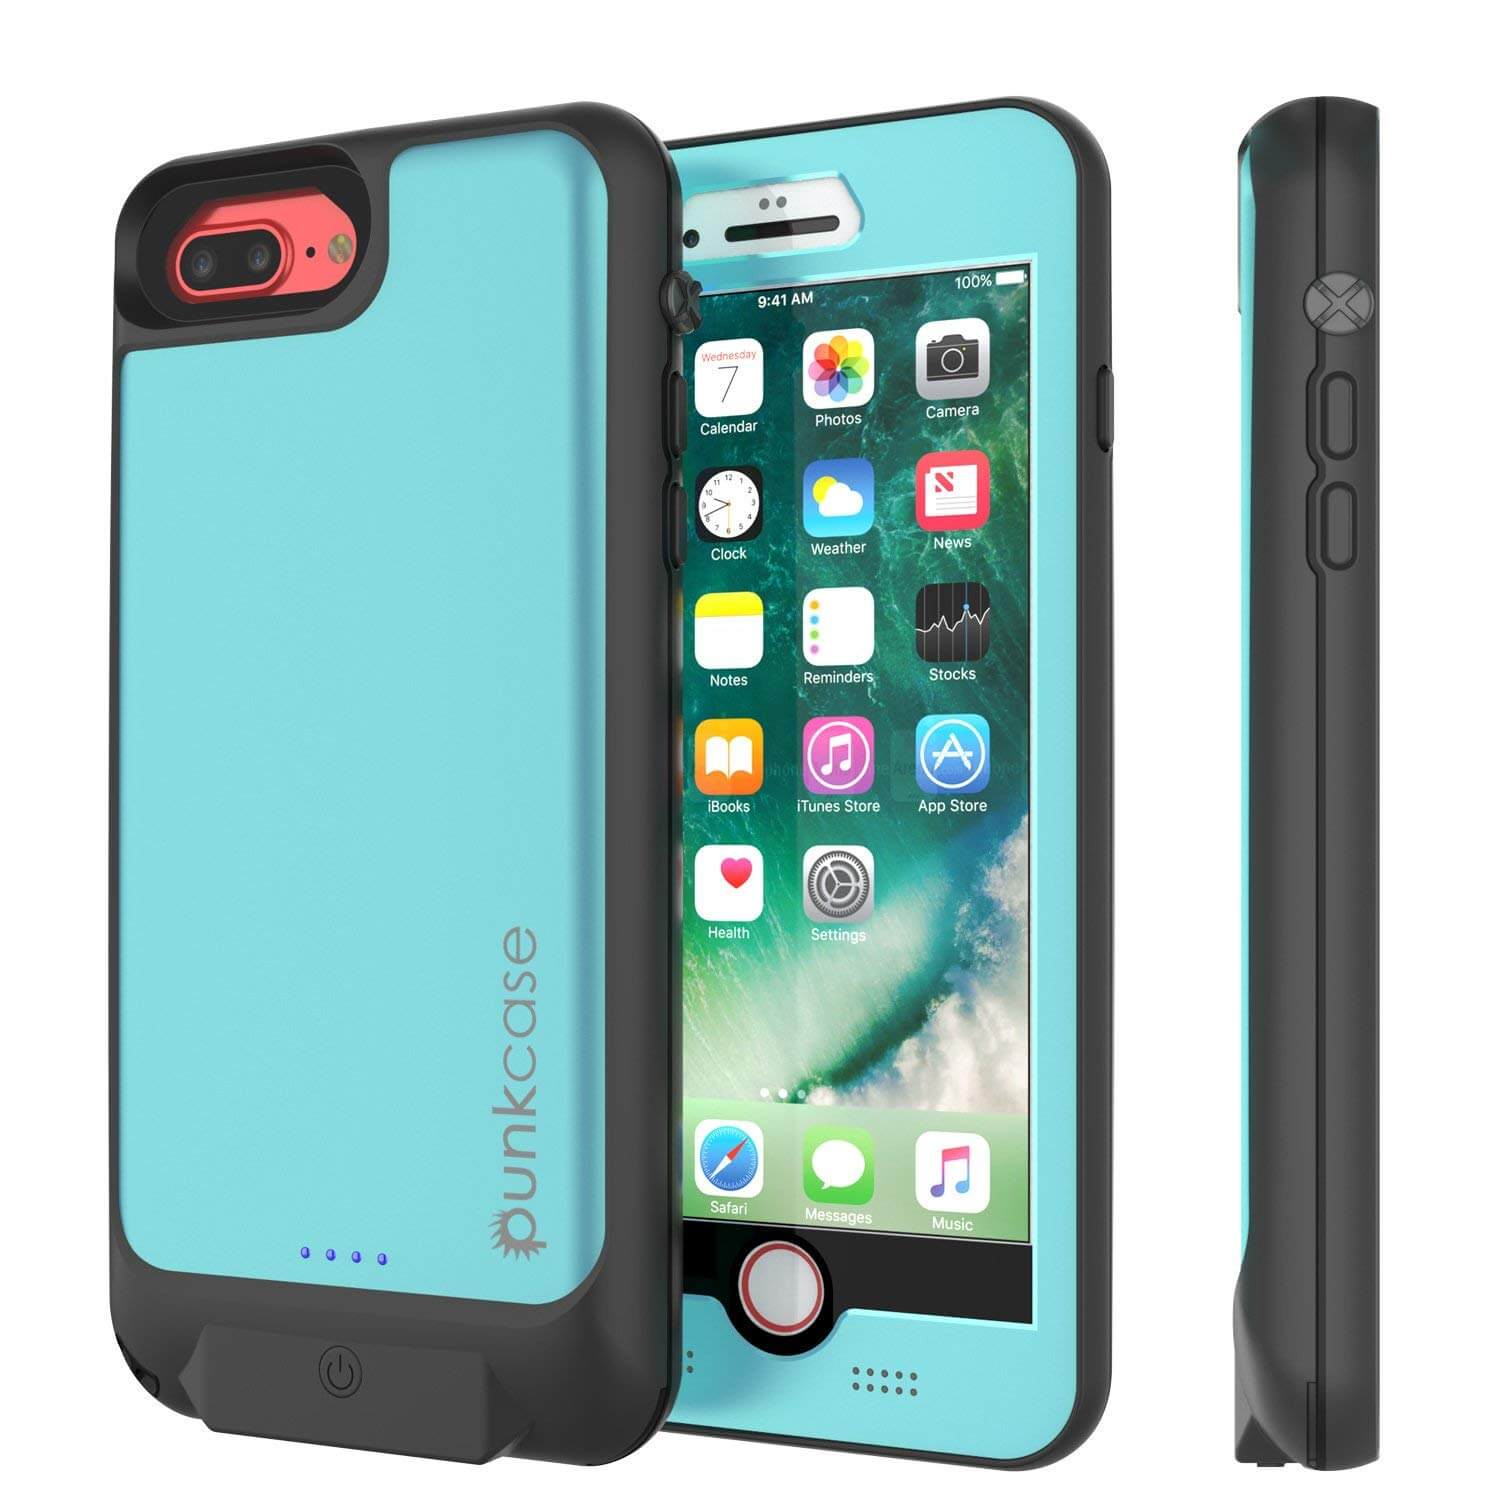 PunkJuice iPhone 8+ 7+ Plus Battery Case Teal - Waterproof Slim Power Juice Bank with 4300mAh